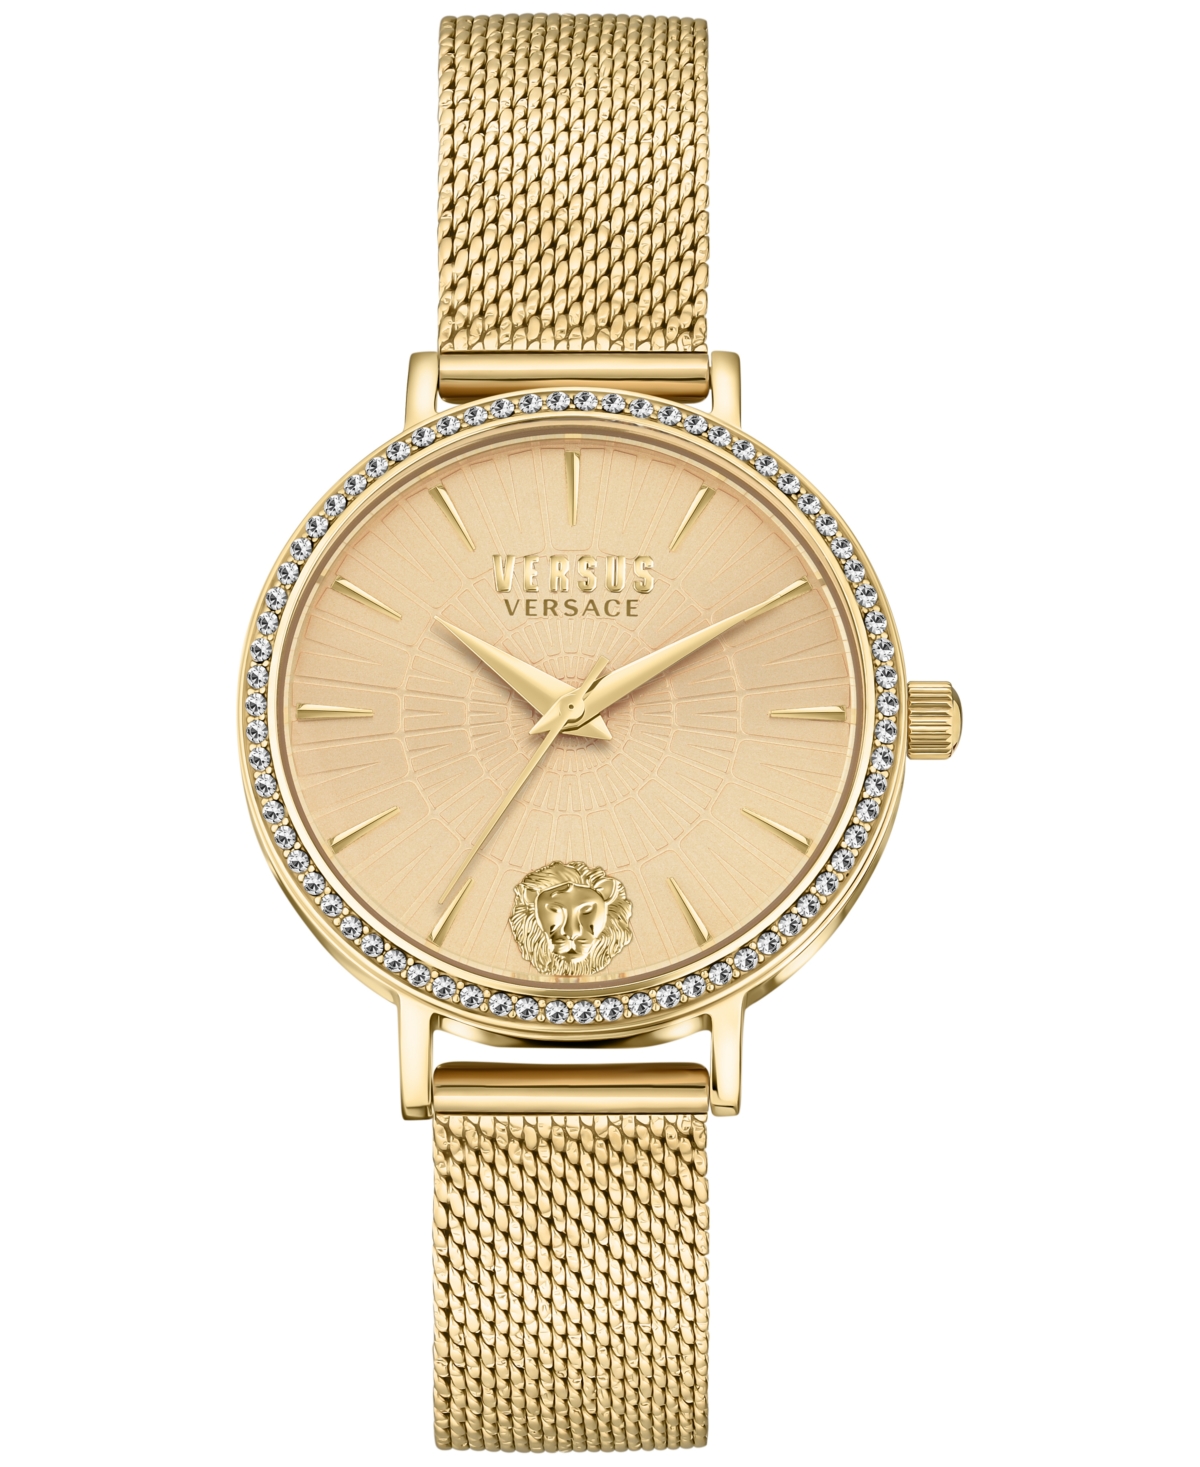 Shop Versus Women's Mar Vista Gold Ion-plated Mesh Bracelet Watch 34mm